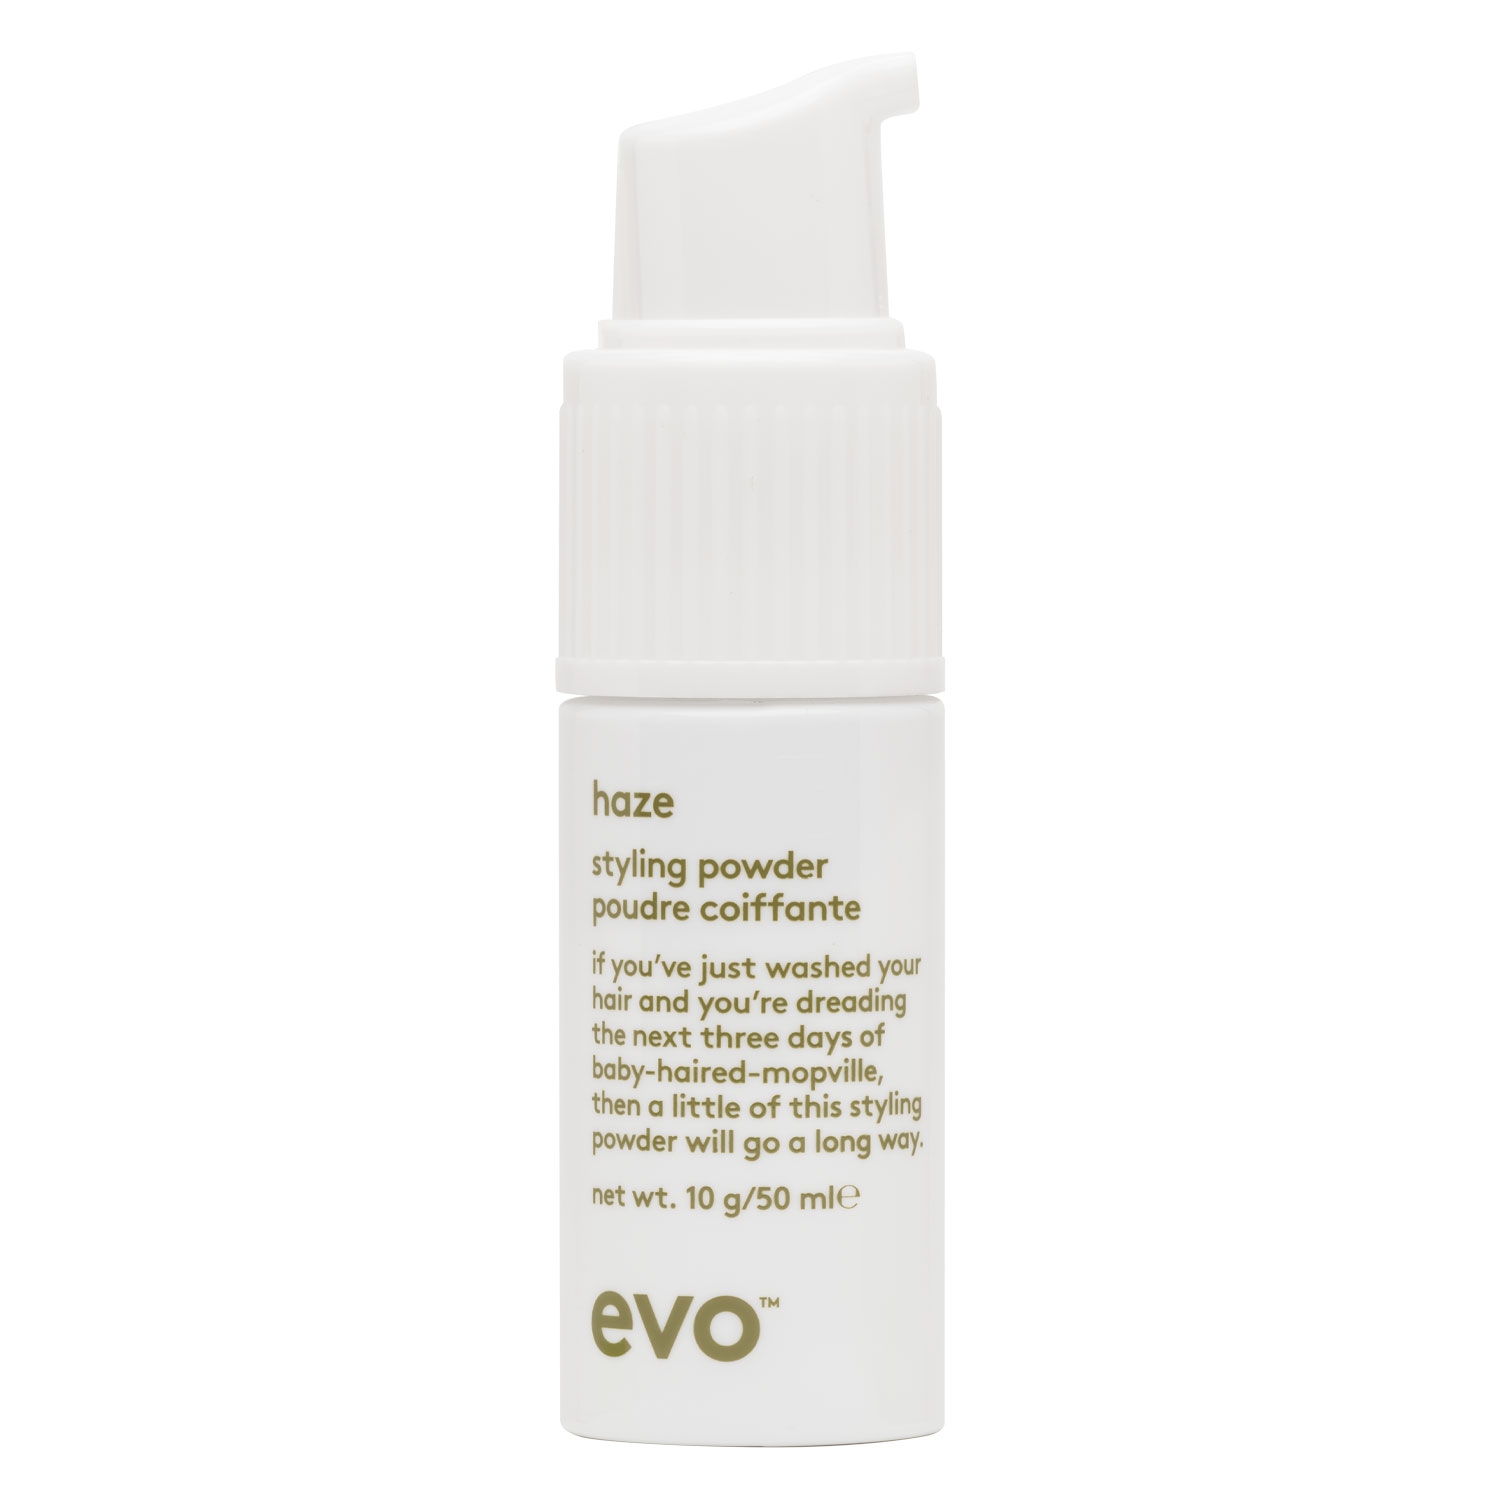 Product image from evo style - haze styling powder